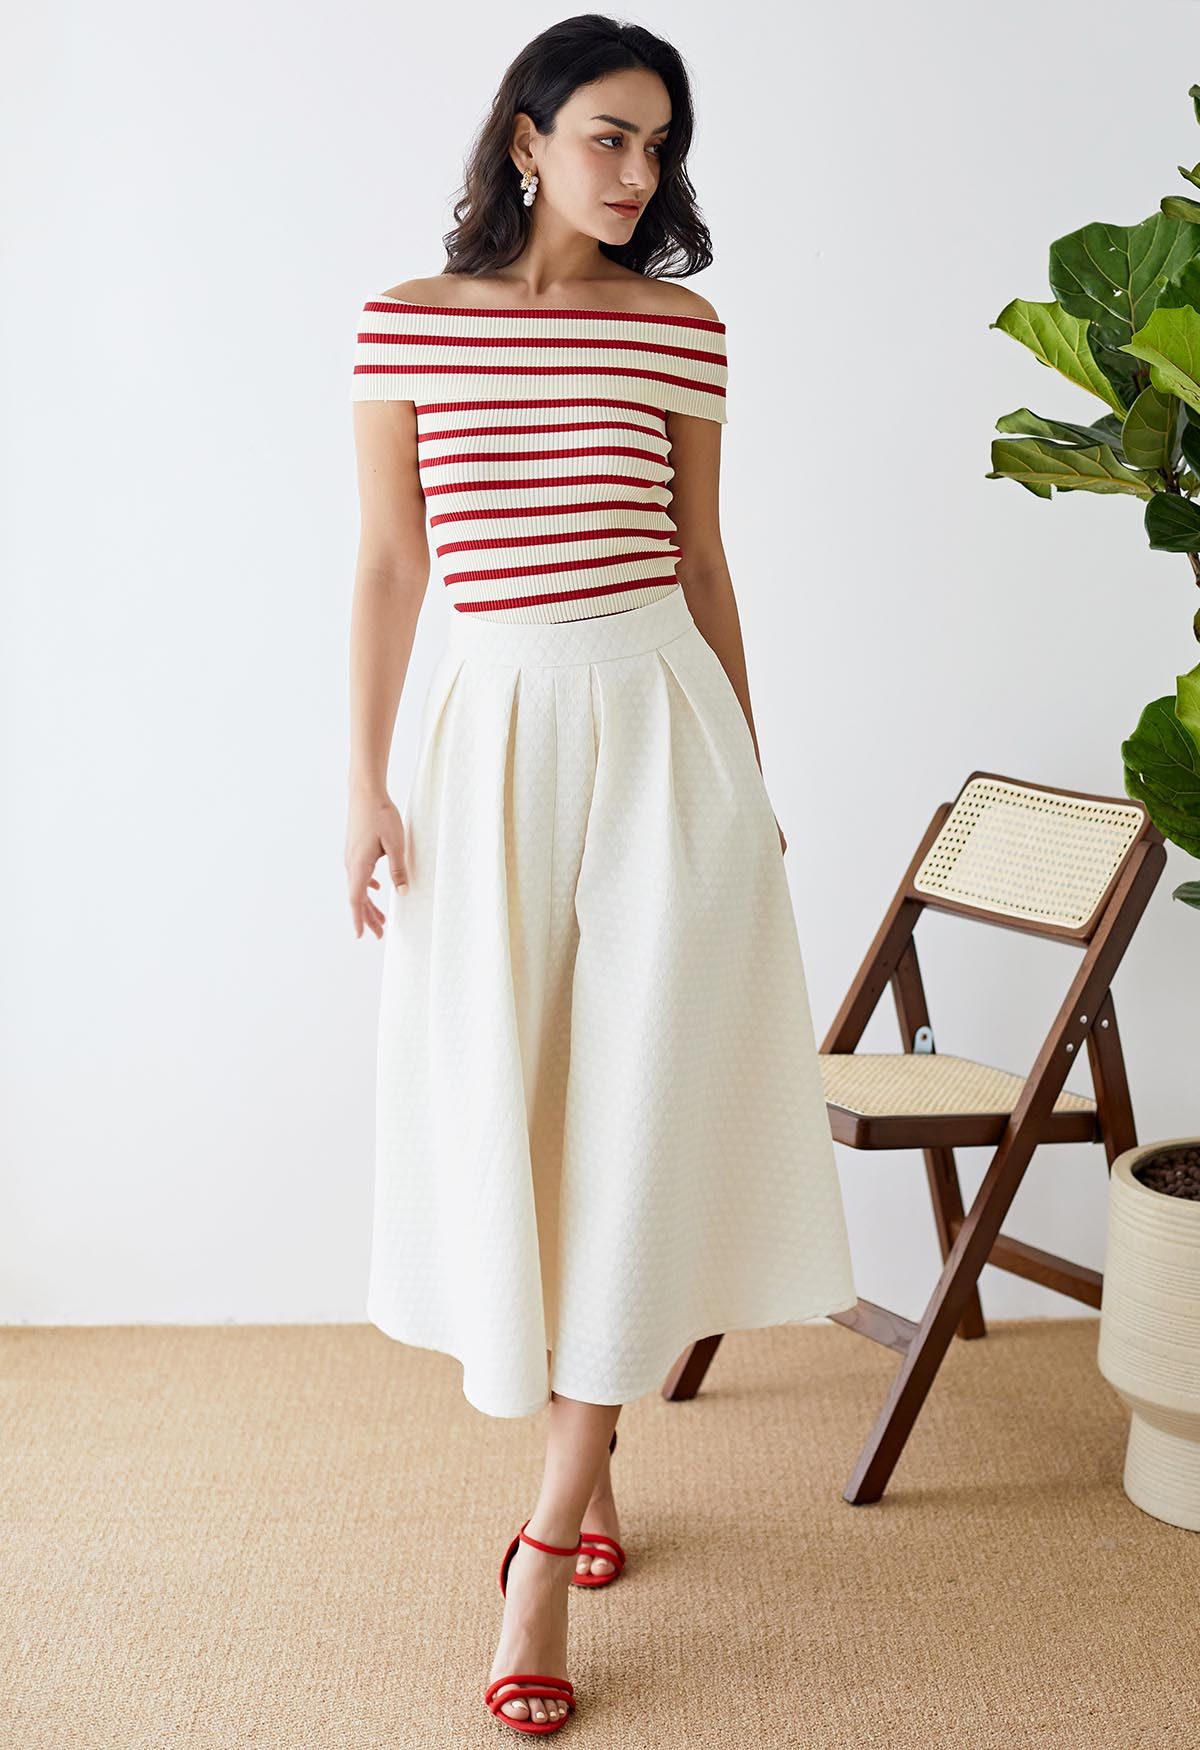 Embossed Heart Texture Pleated Midi Skirt in Ivory